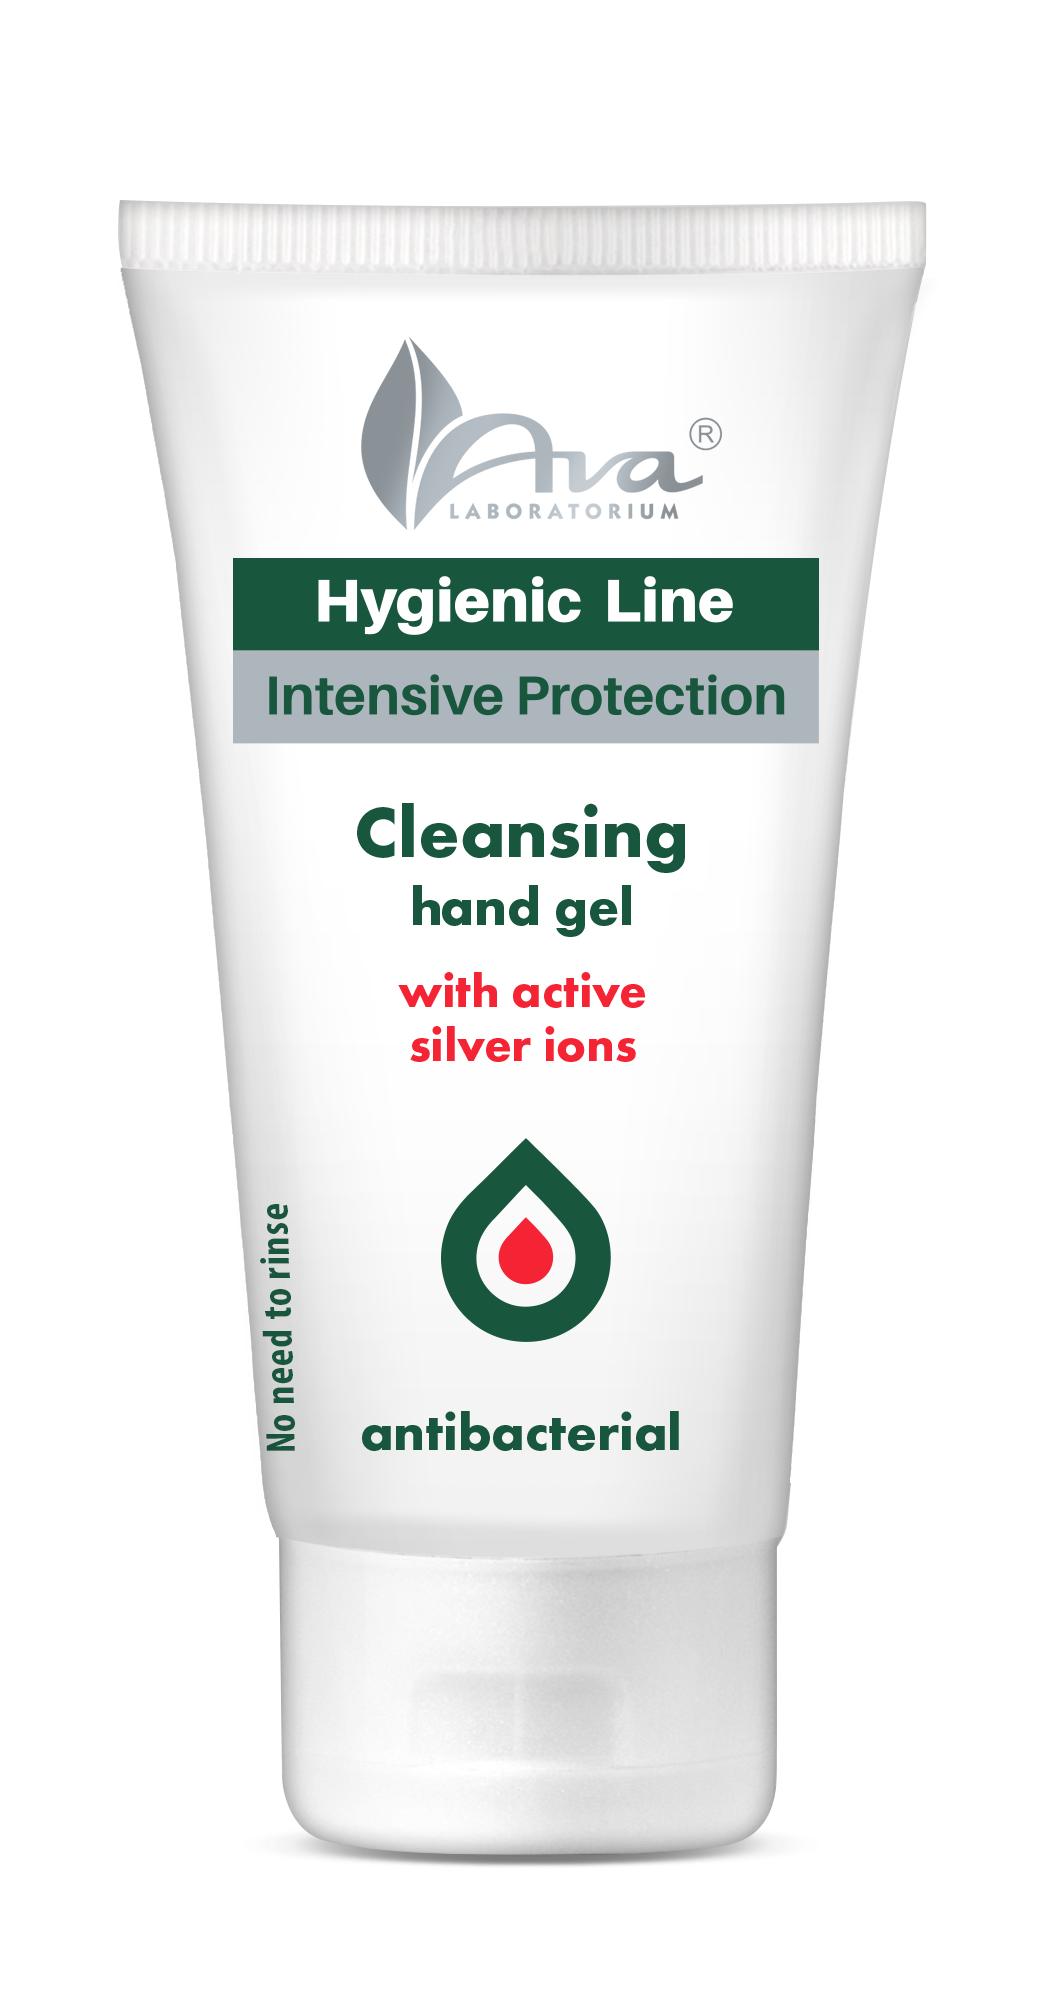 Hygenic Line – Cleansing hand gel